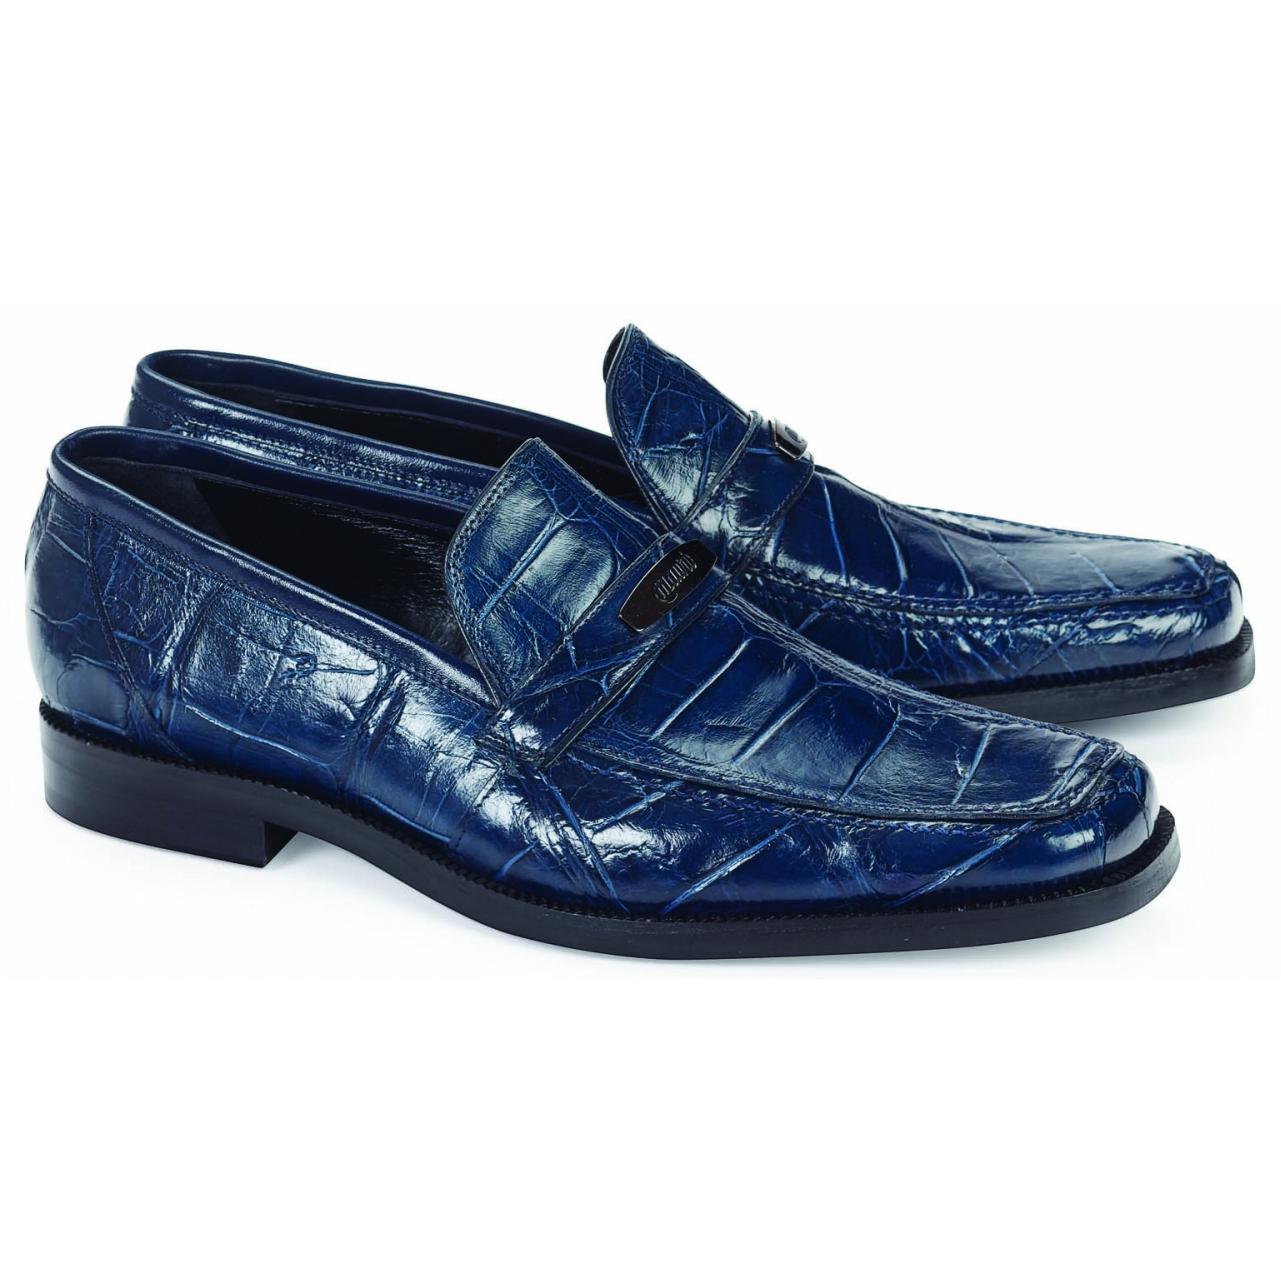 Mauri Spada 4692 Wonder Blue Genuine Alligator Loafer Shoes - $889.90 ...